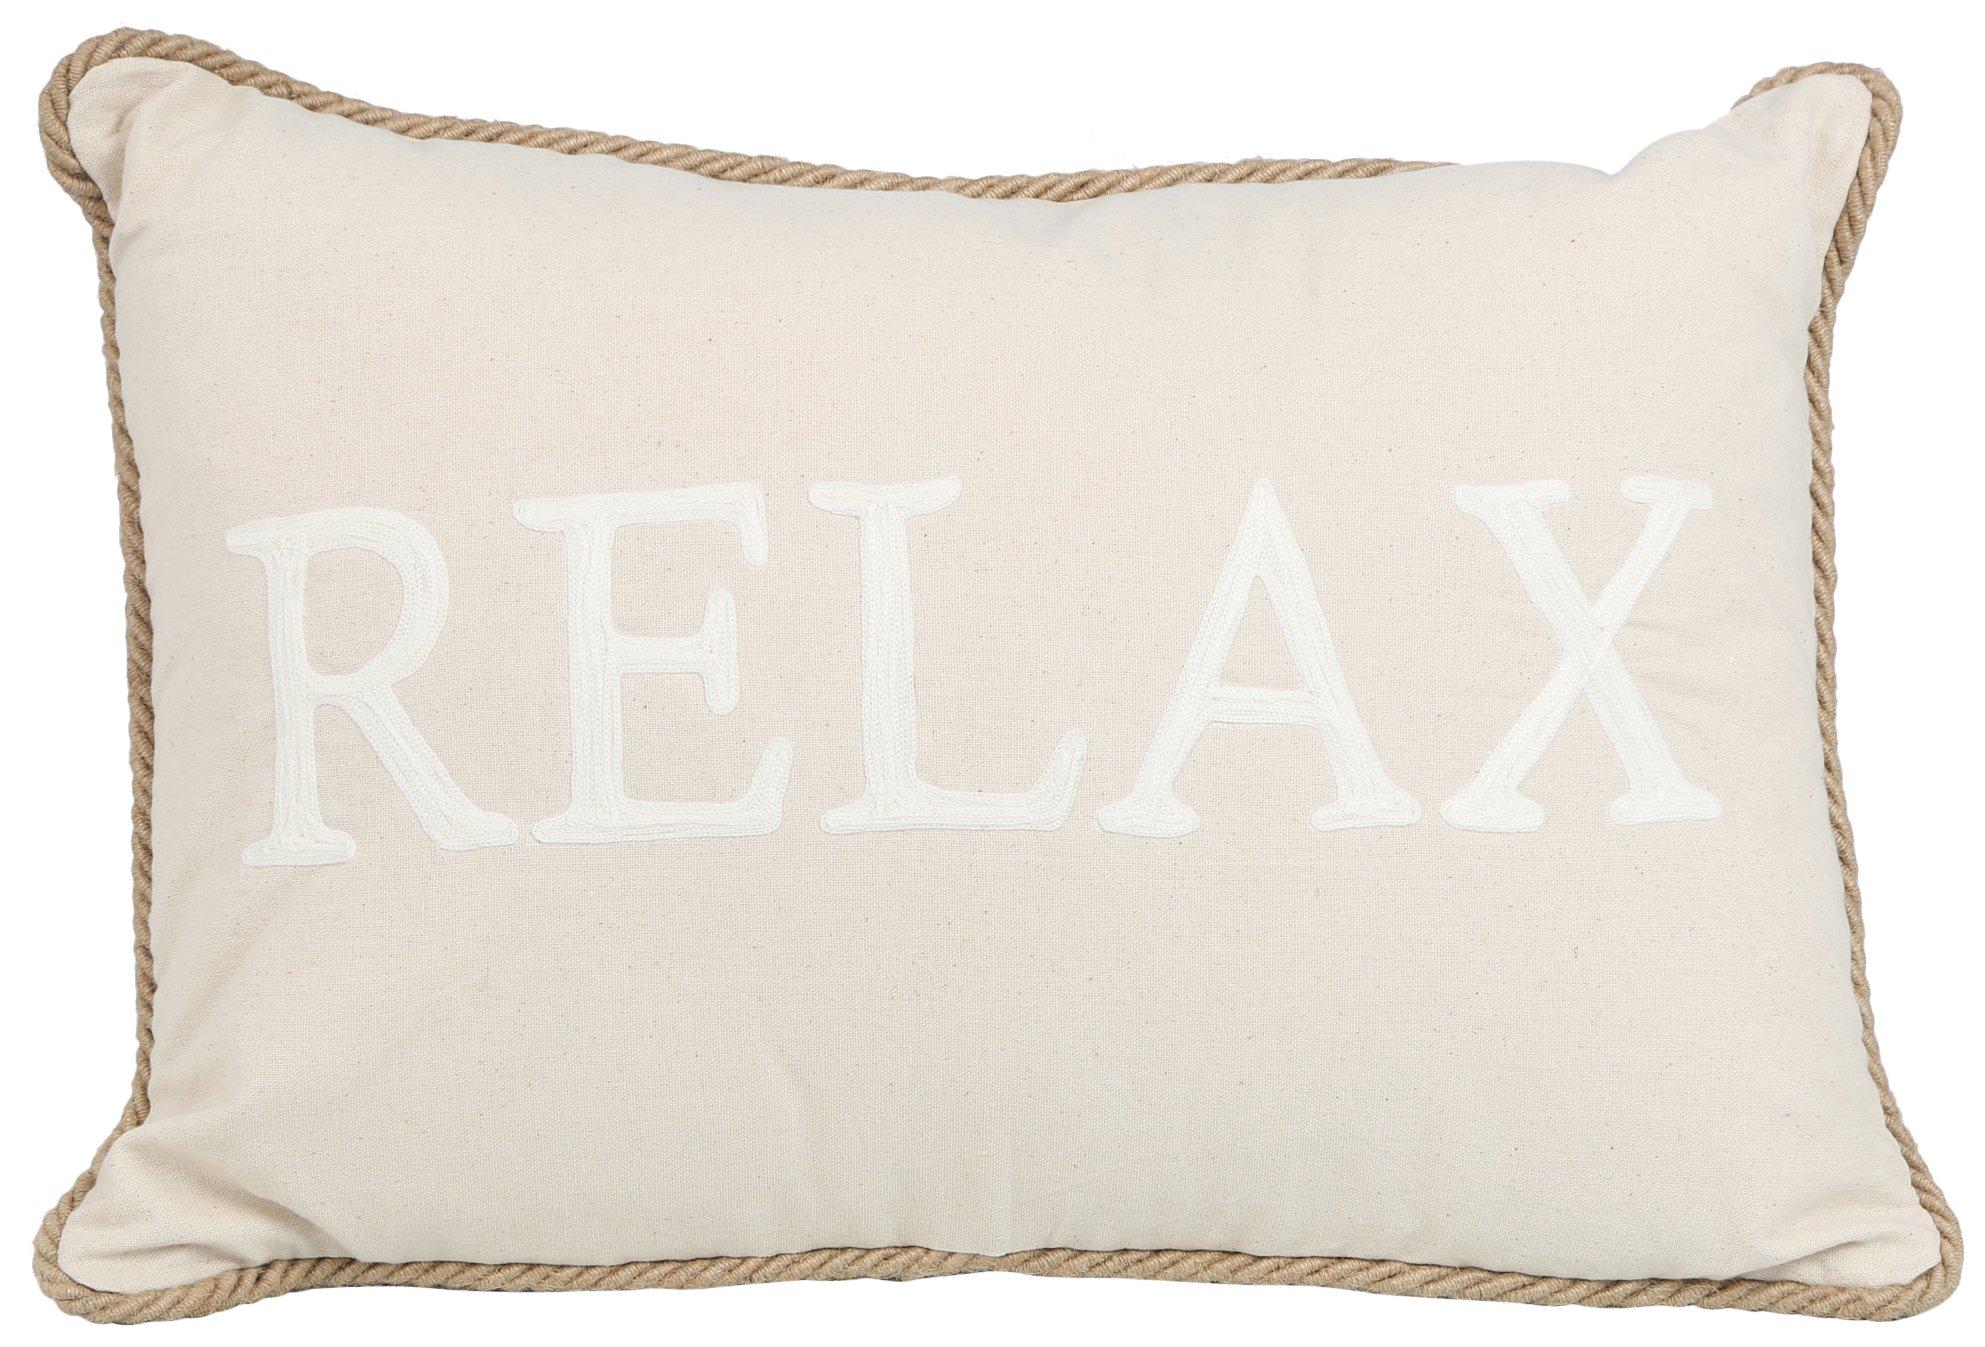 Coastal Home 14x20 Relax Decorative Pillow